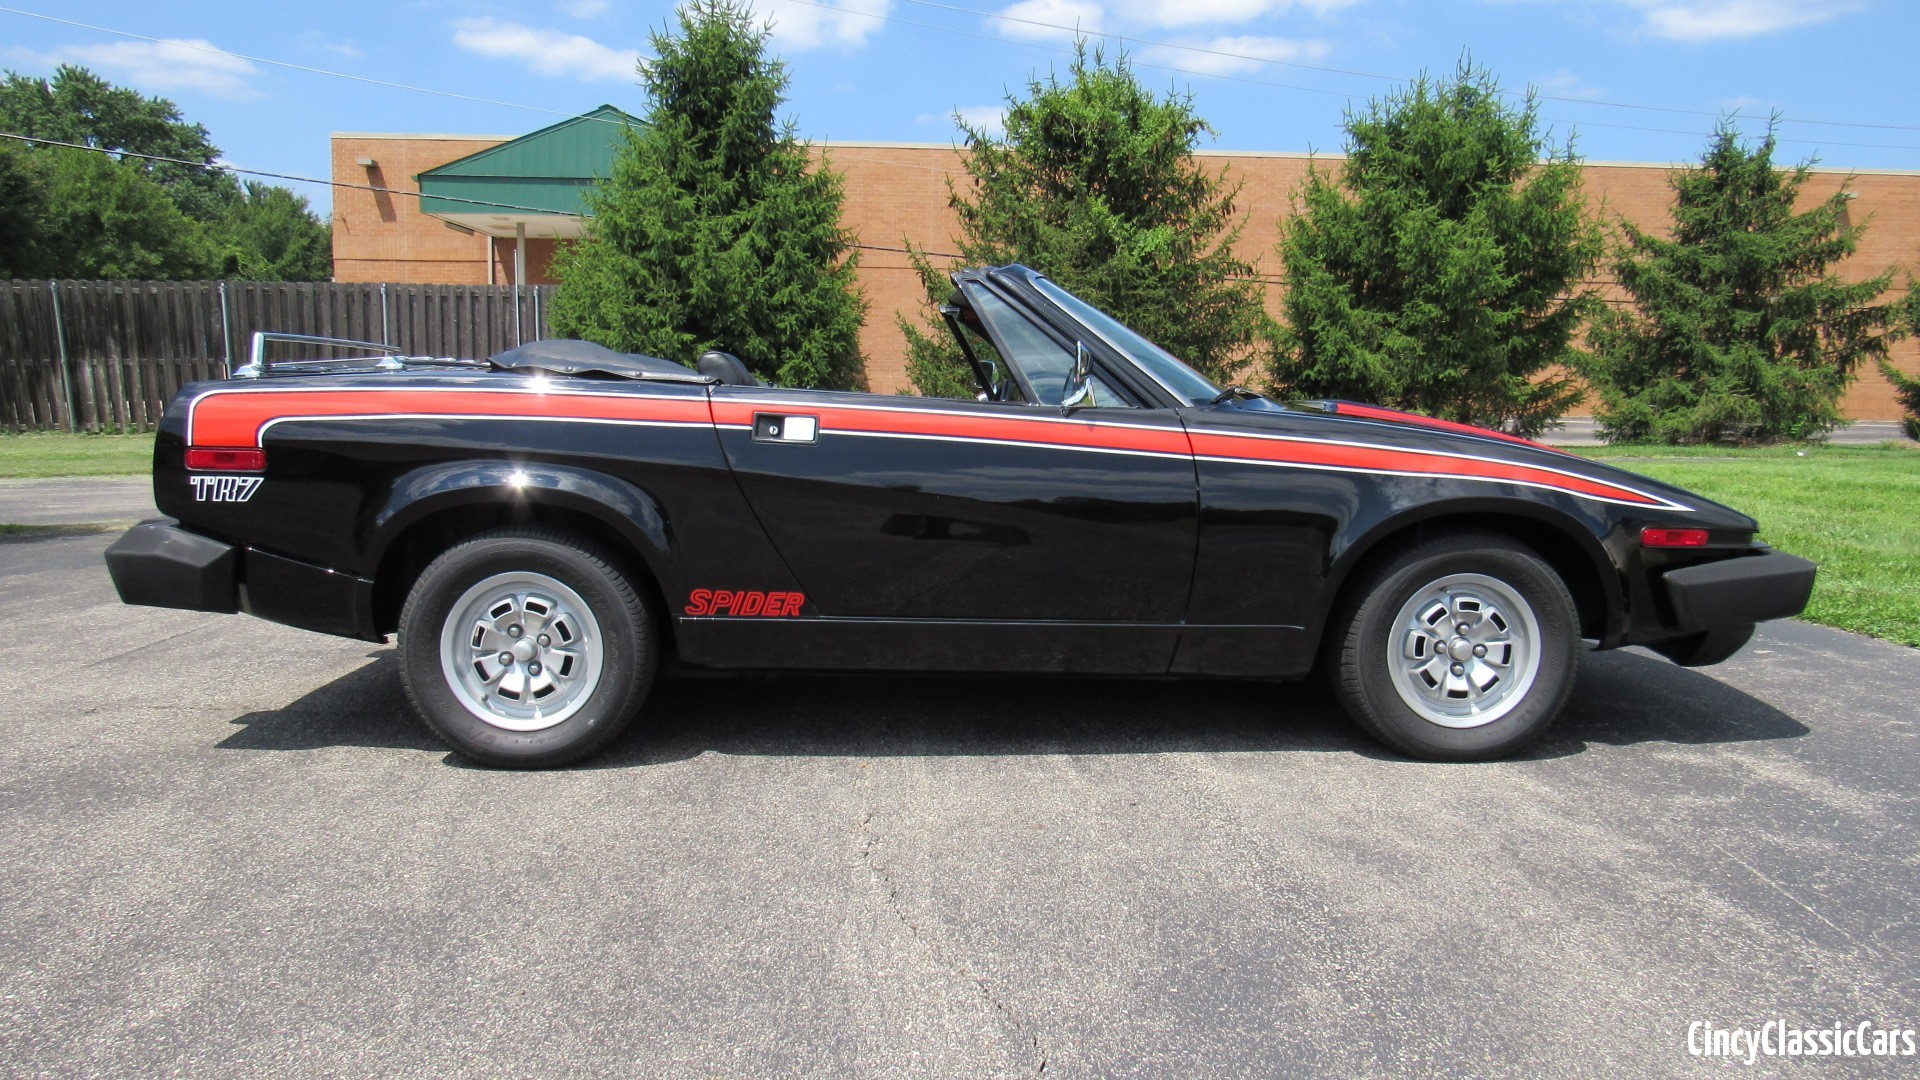 1980 Triumph TR7 Spider, Fuel Injection, Restored, SOLD!